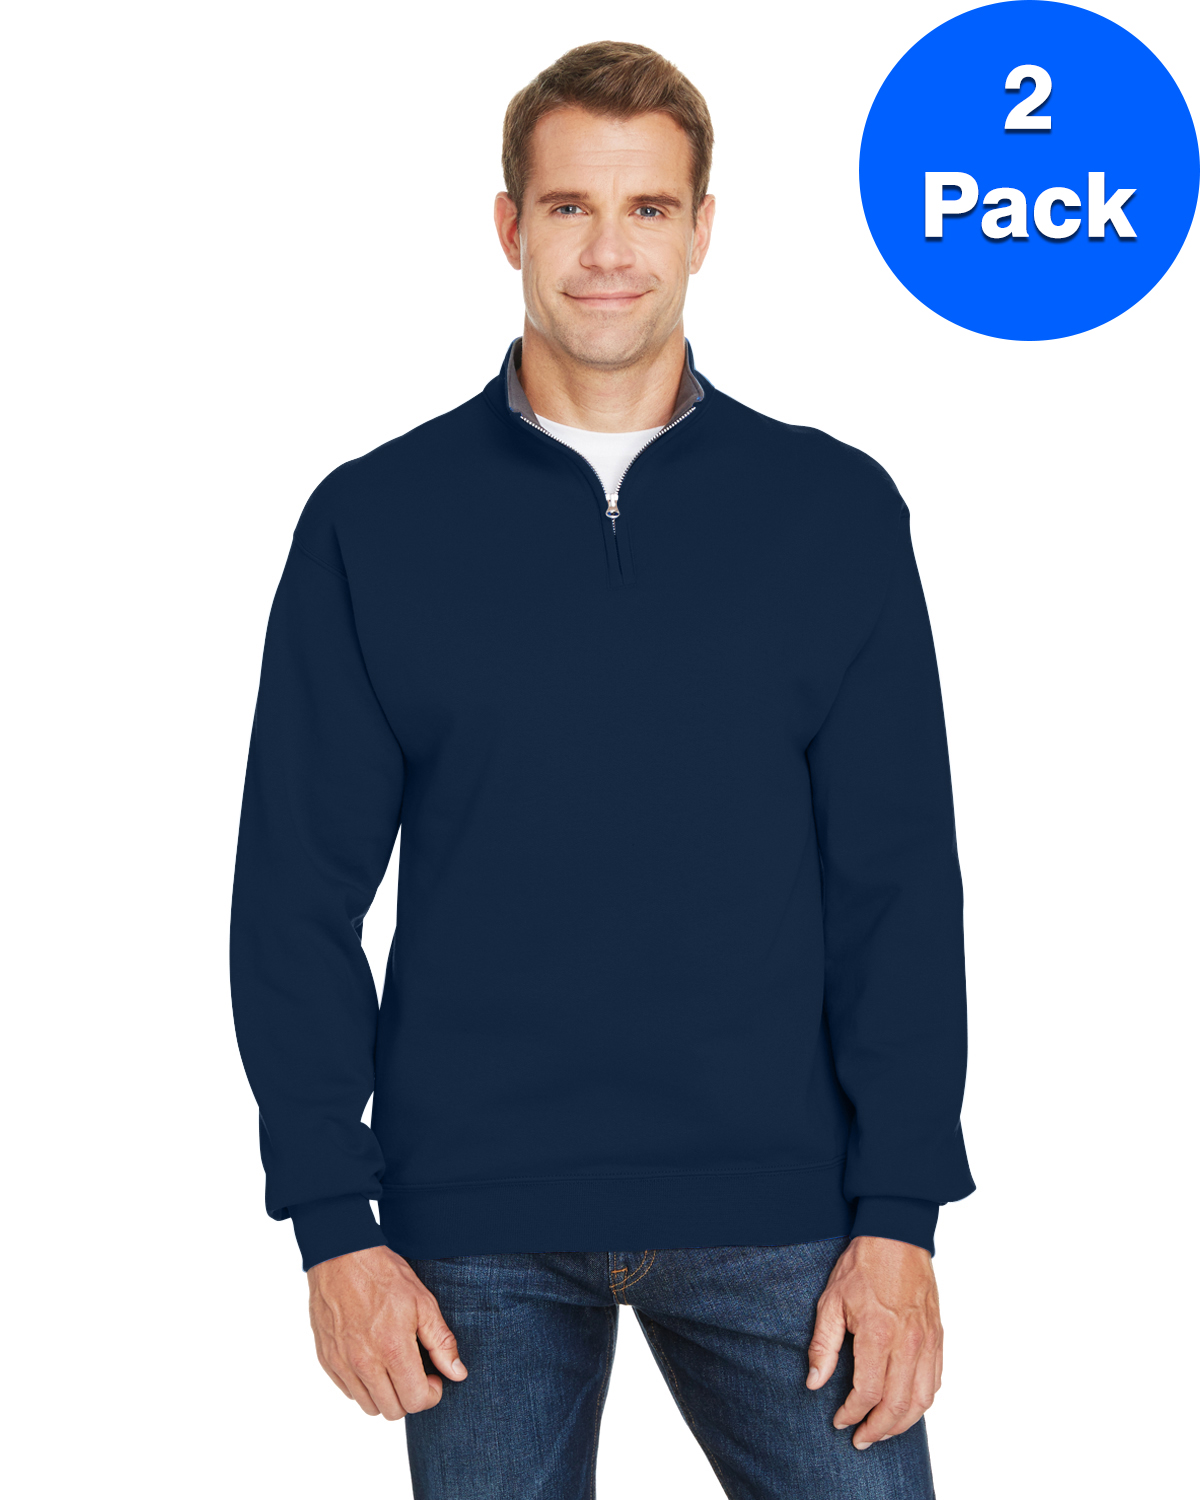 Mens 7.2 oz. Sofspun Quarter-Zip Sweatshirt (2 PACK) - image 2 of 3